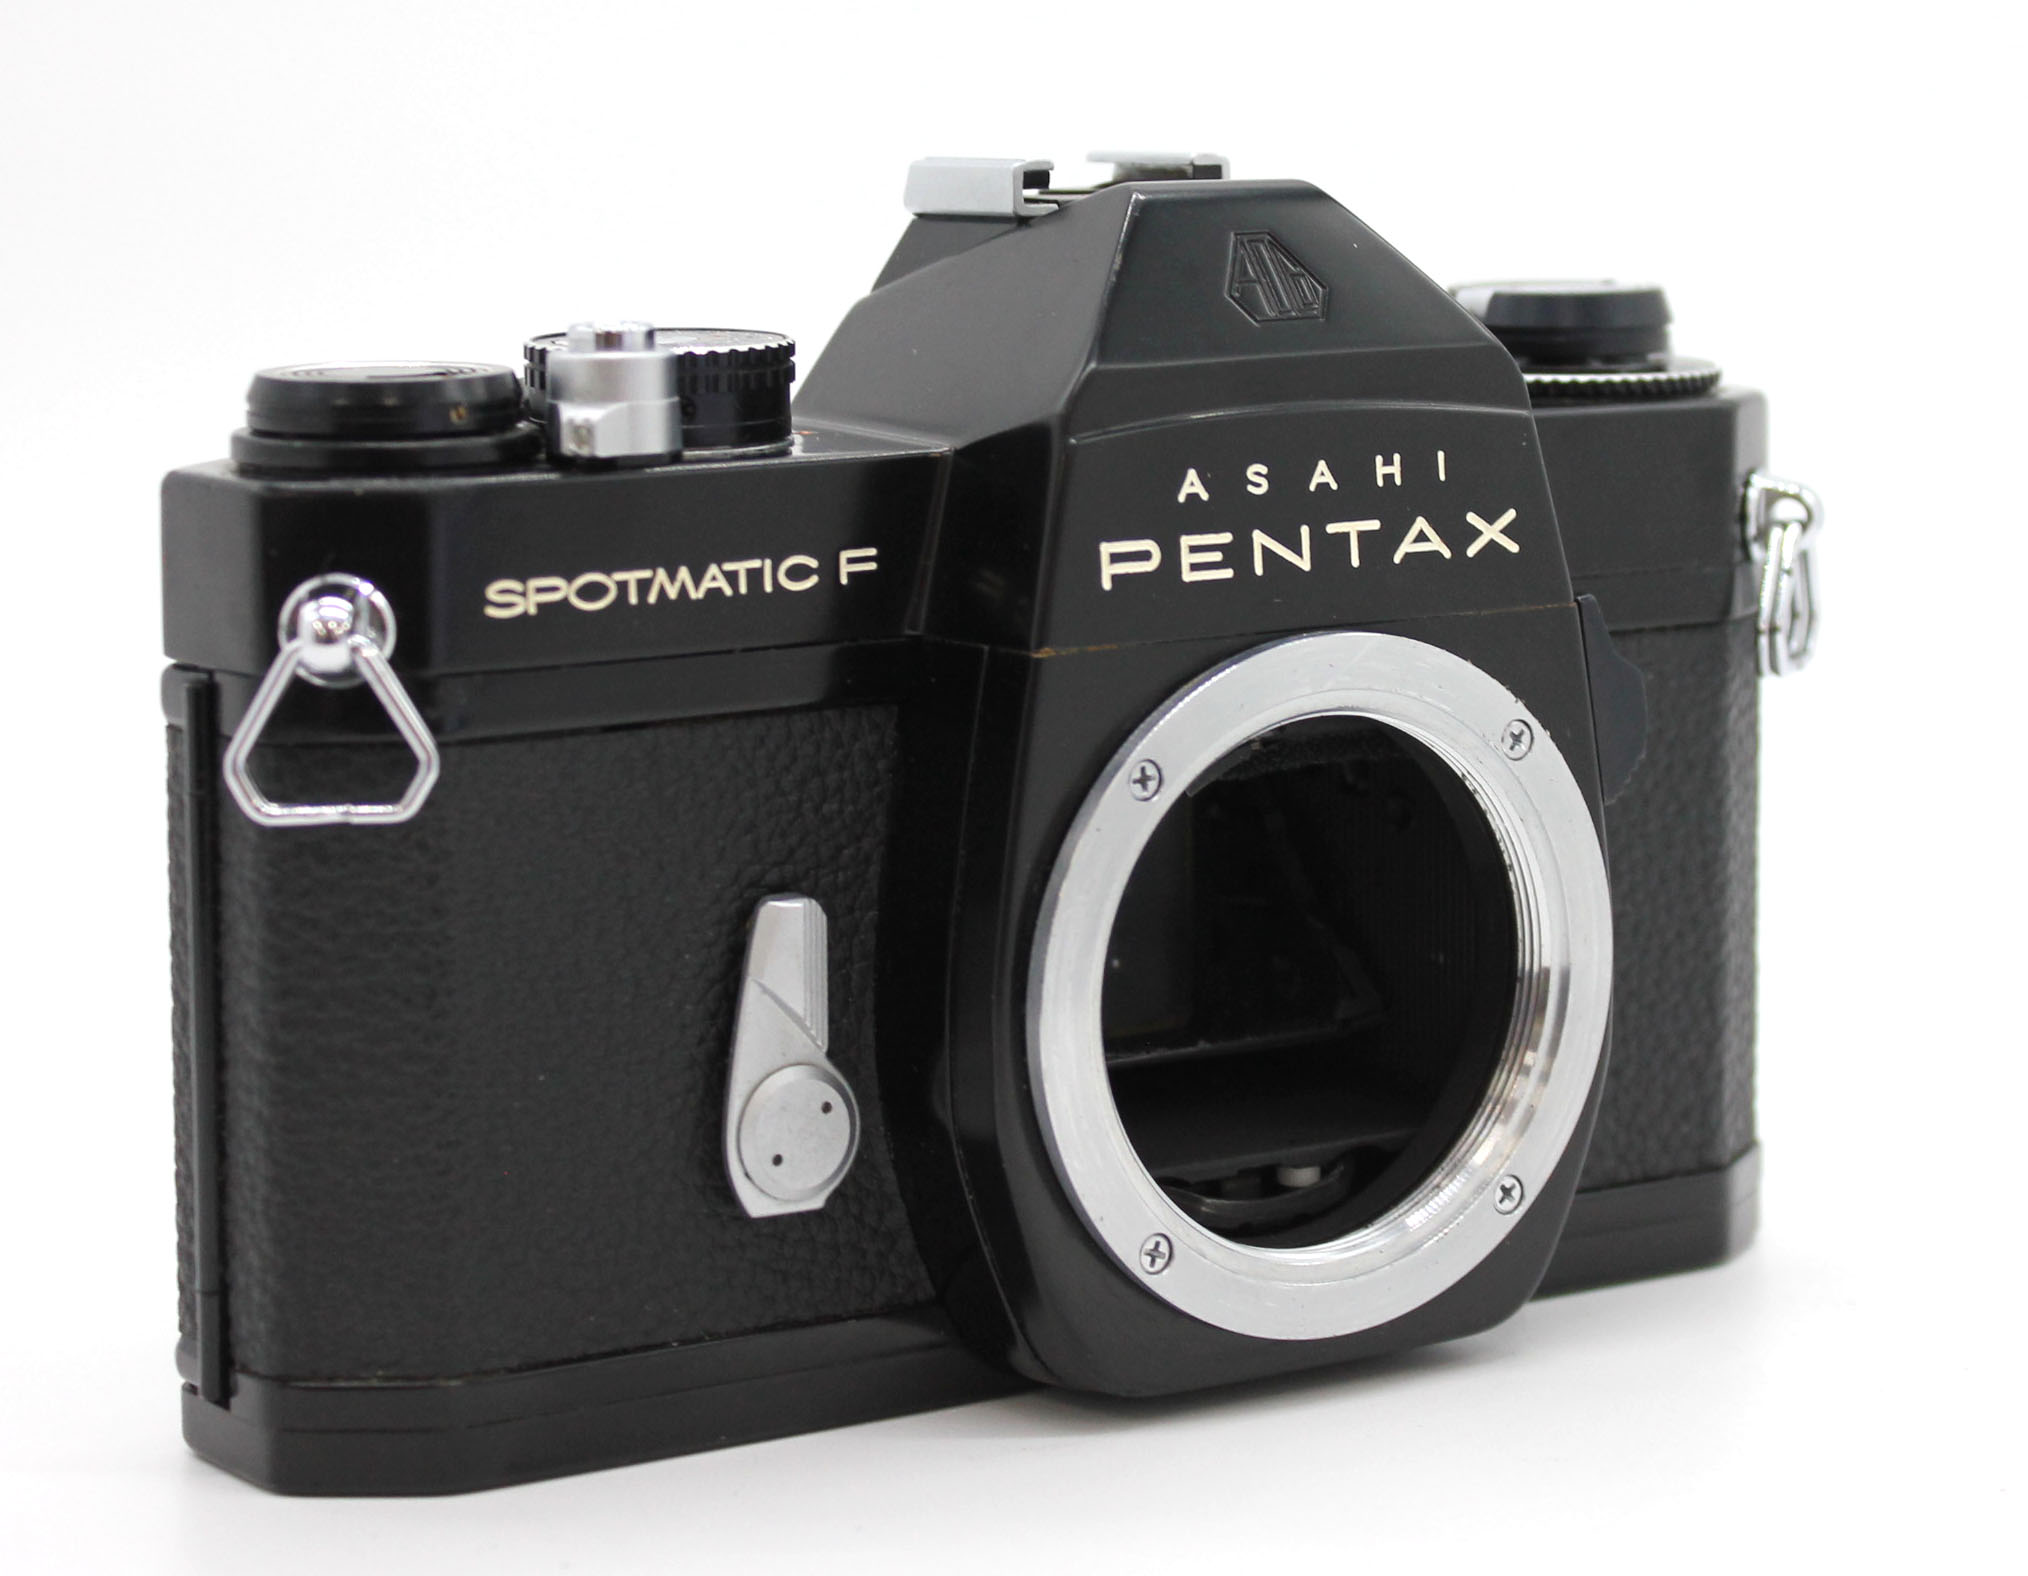 Asahi Pentax Spotmatic F SPF 35mm SLR Camera Black w/ SMC Super-Multi-Coated Takumar 55mm F/1.8 Lens from Japan Photo 2